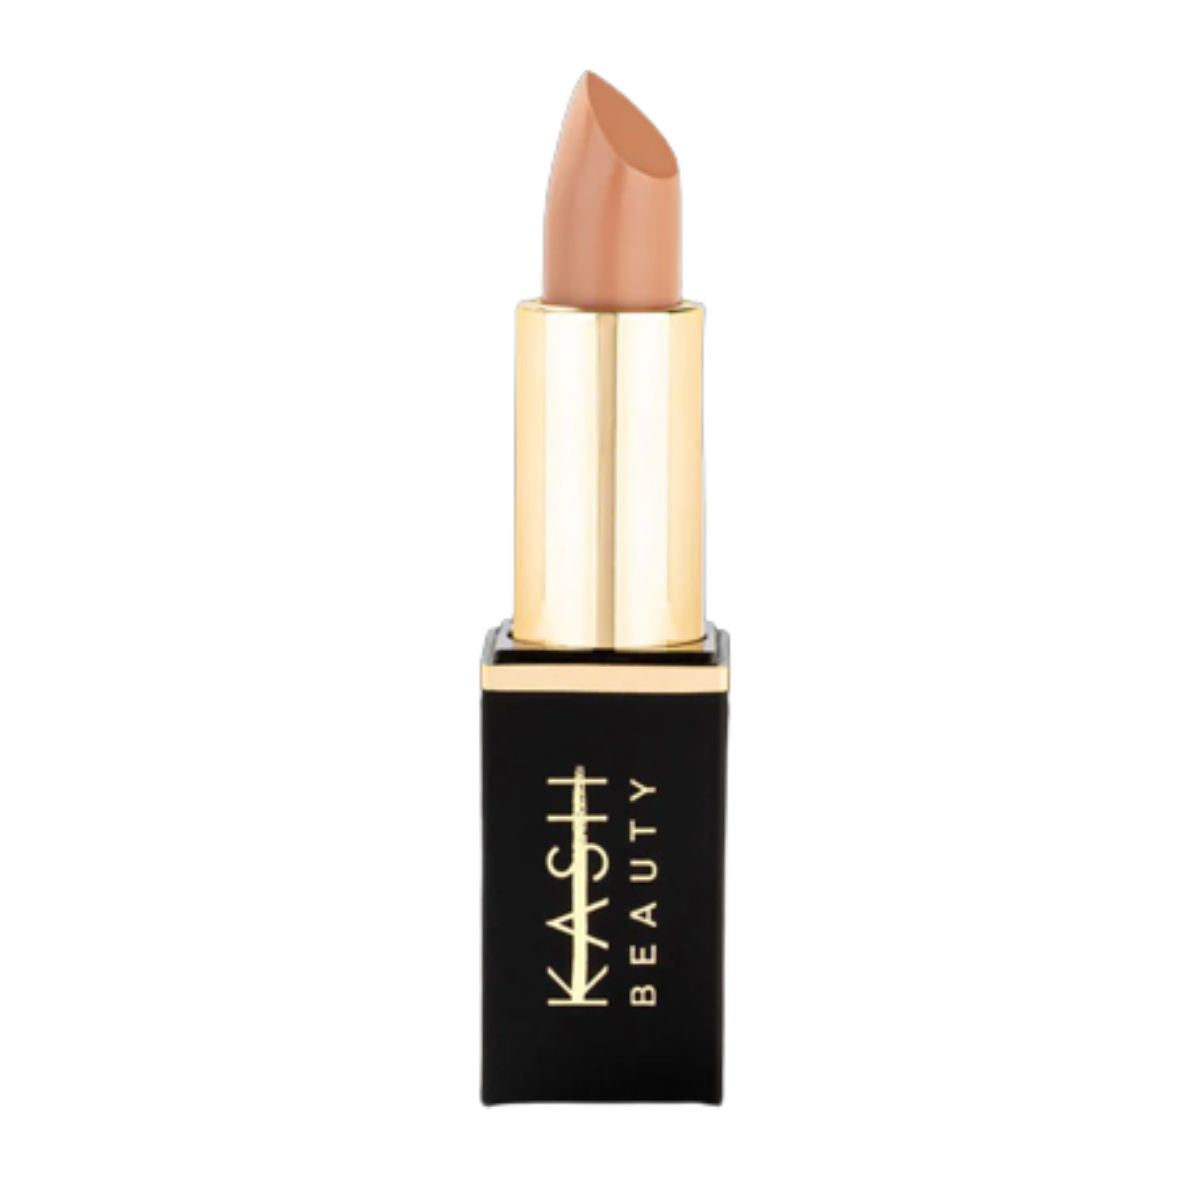 satin finish nude lipstick